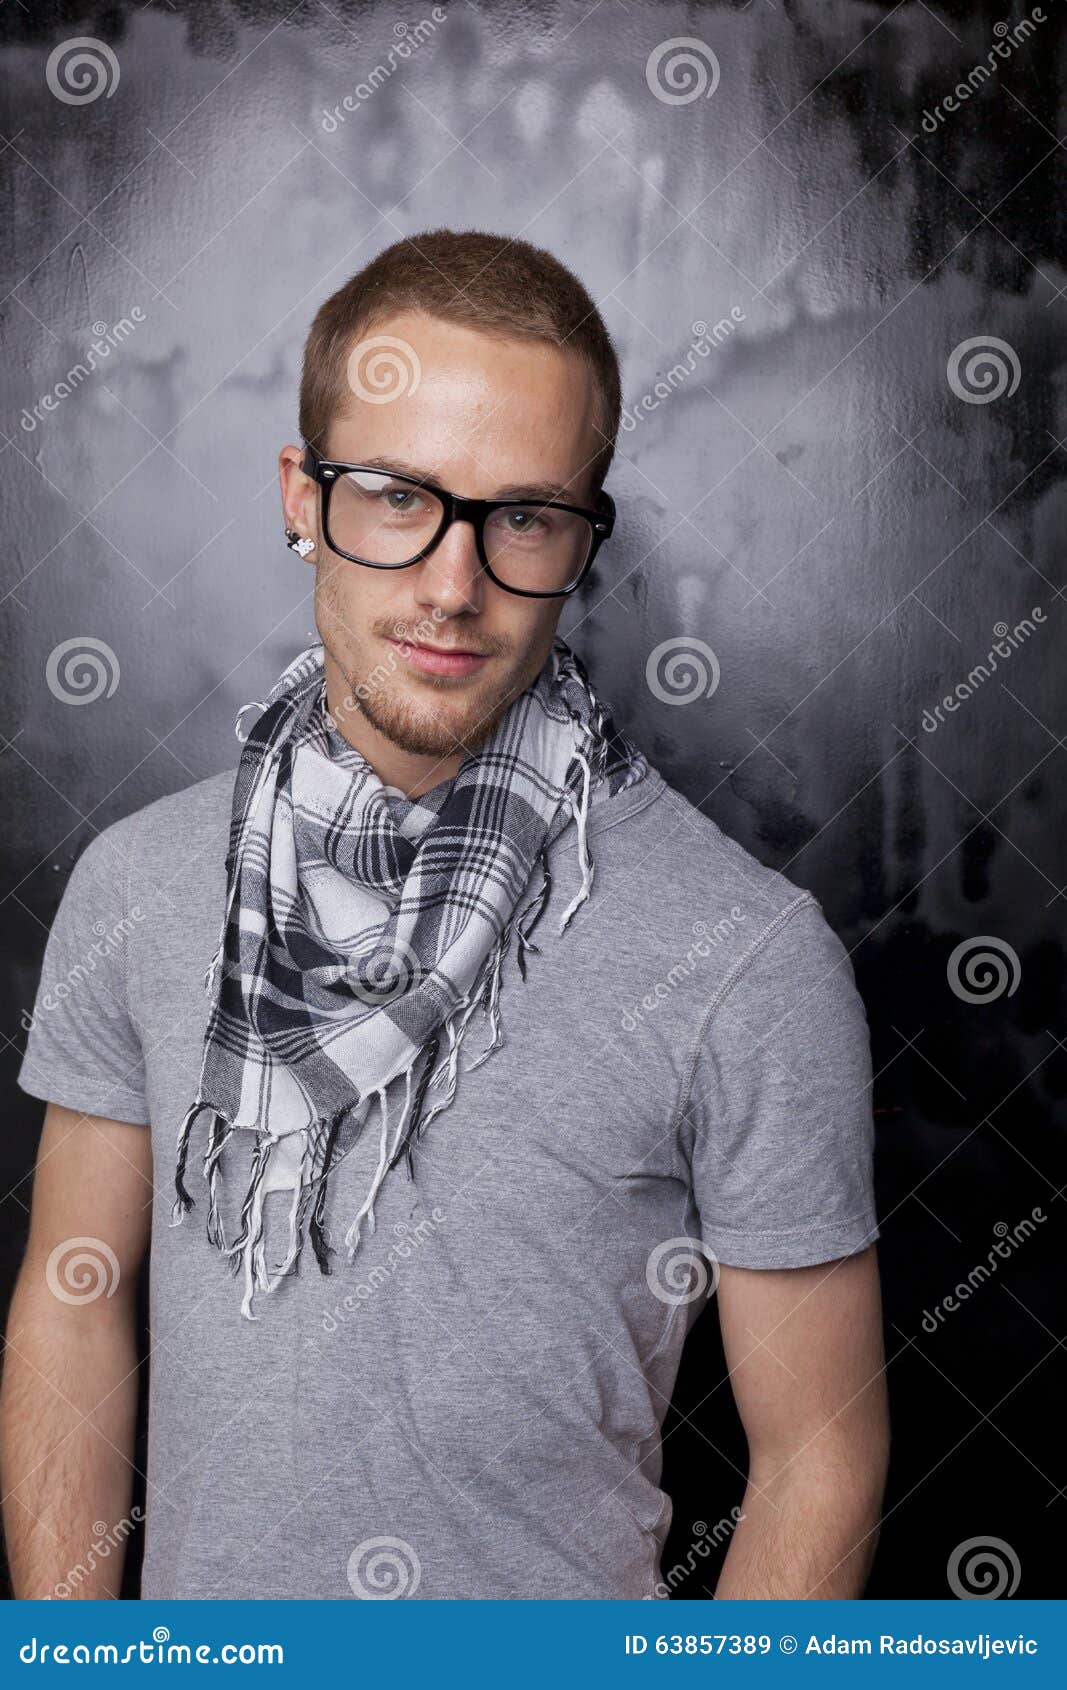 Good Looking Metrosexual Gay Men Stock Image - Image of modern